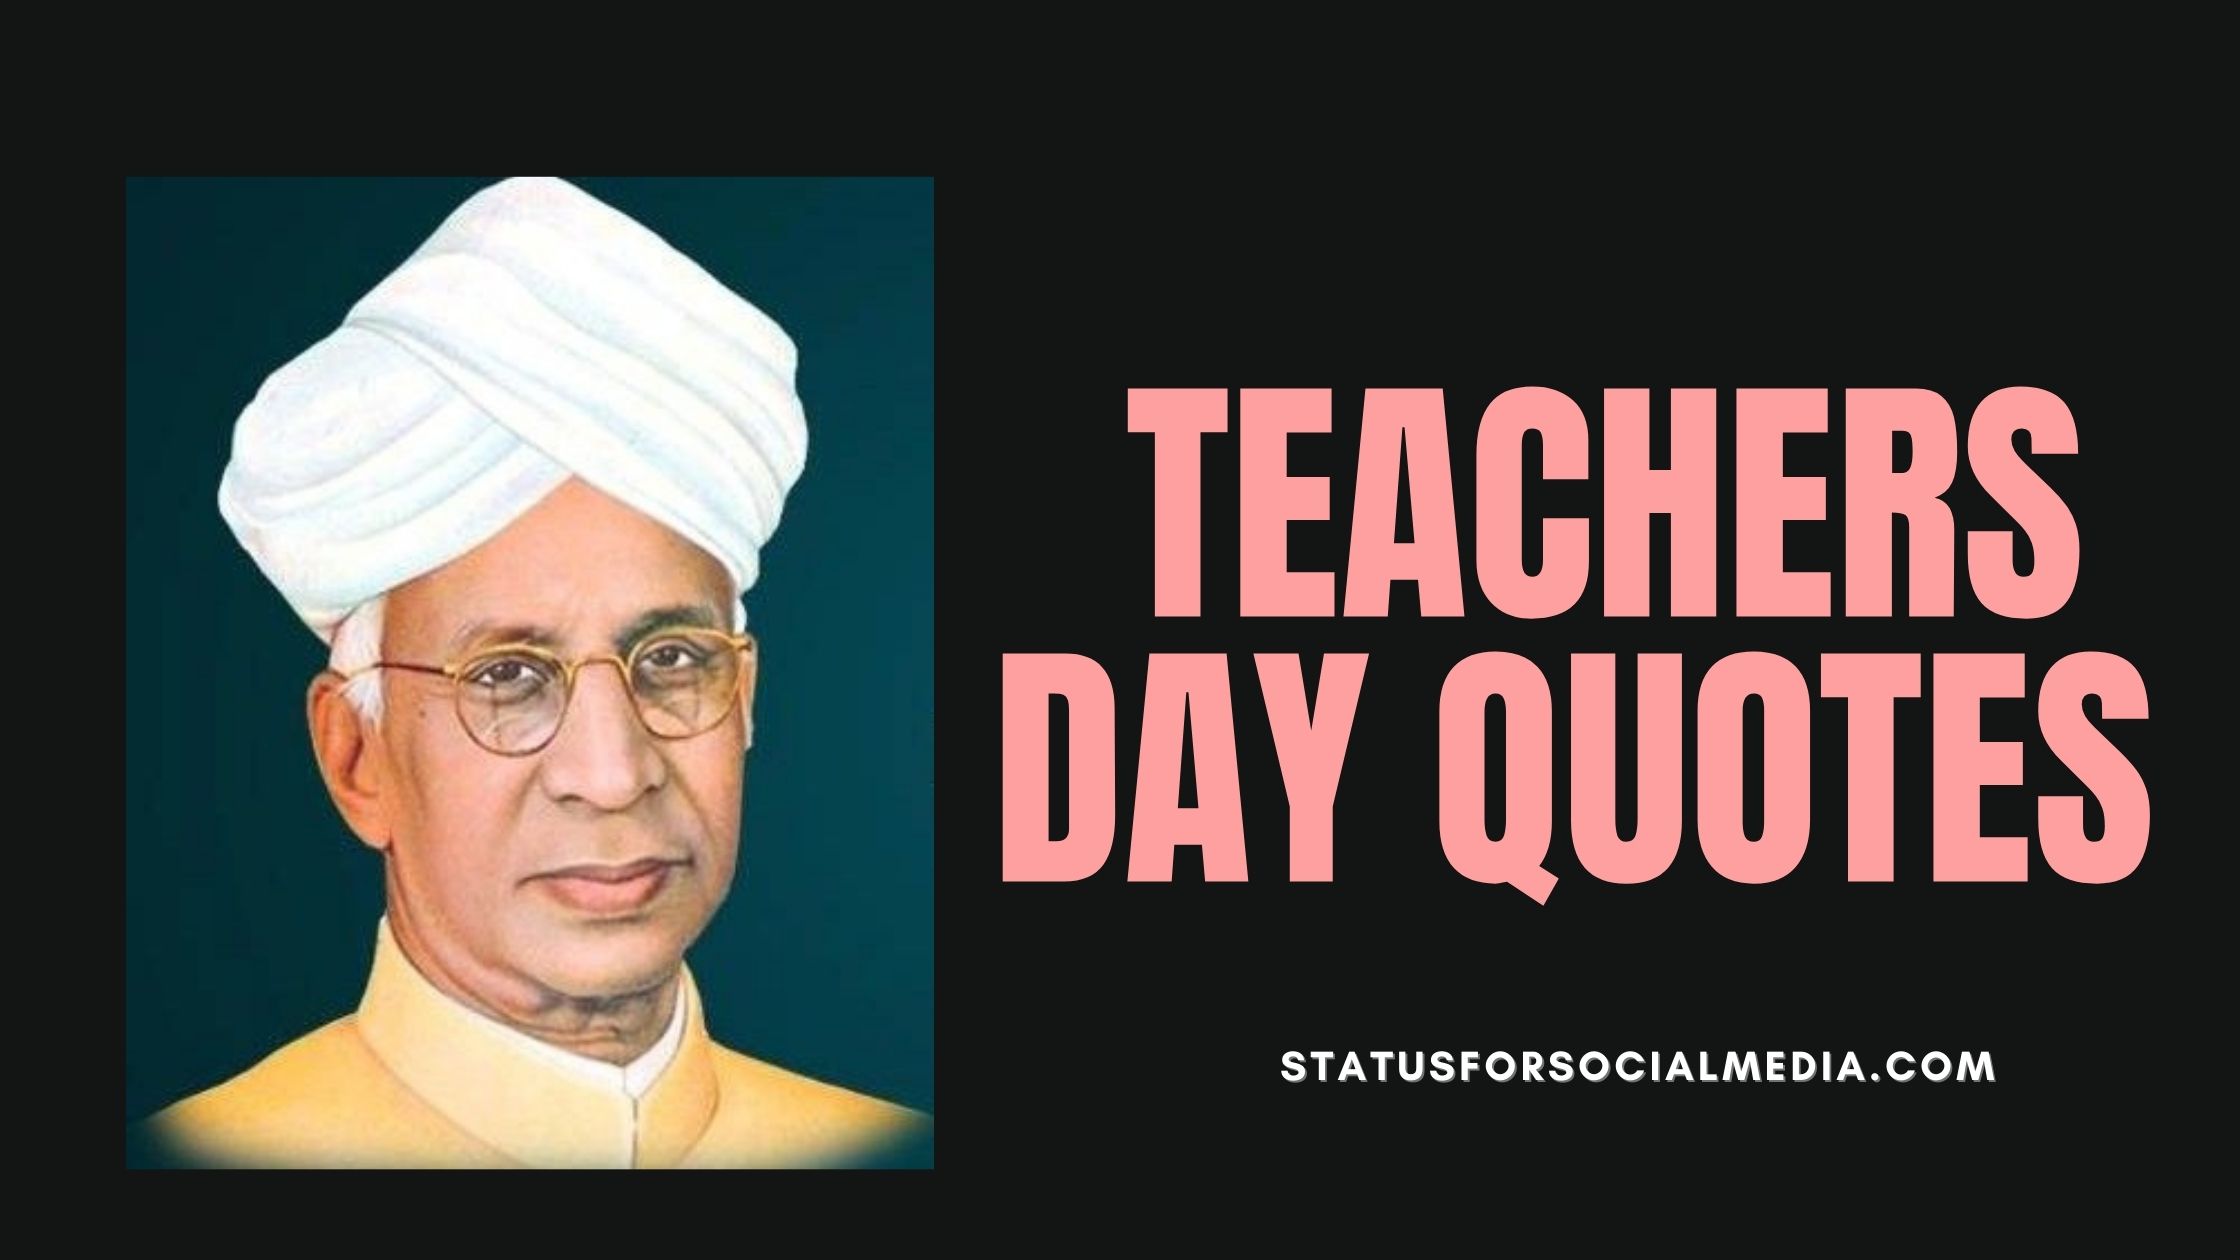 Teachers day quotes - sfsm